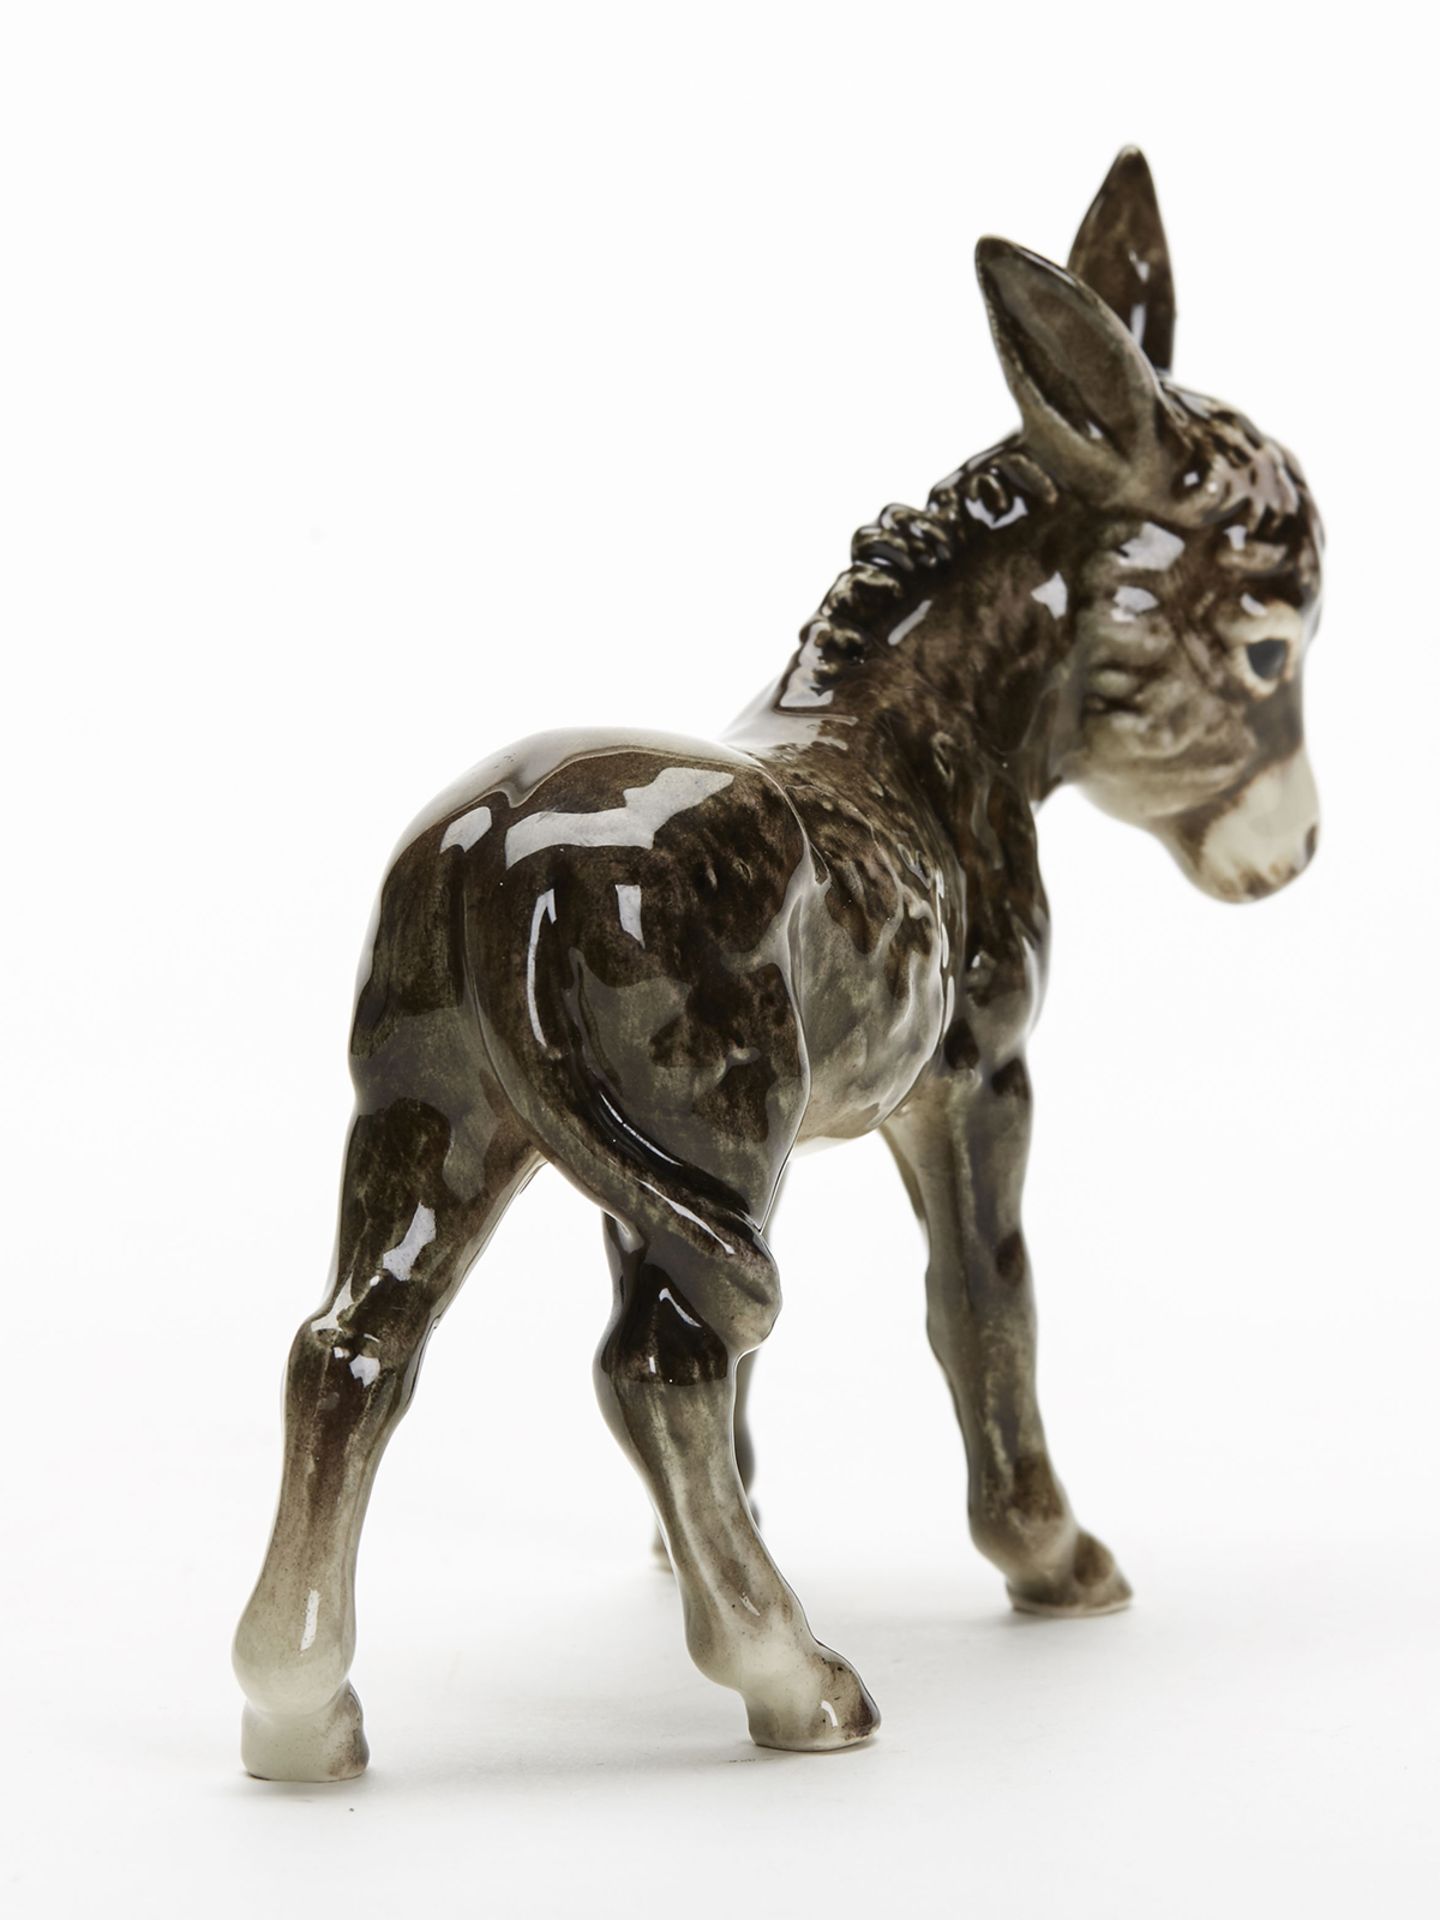 Vintage W Goebel Pottery Figure Of A Donkey 20Th C. - Image 6 of 8